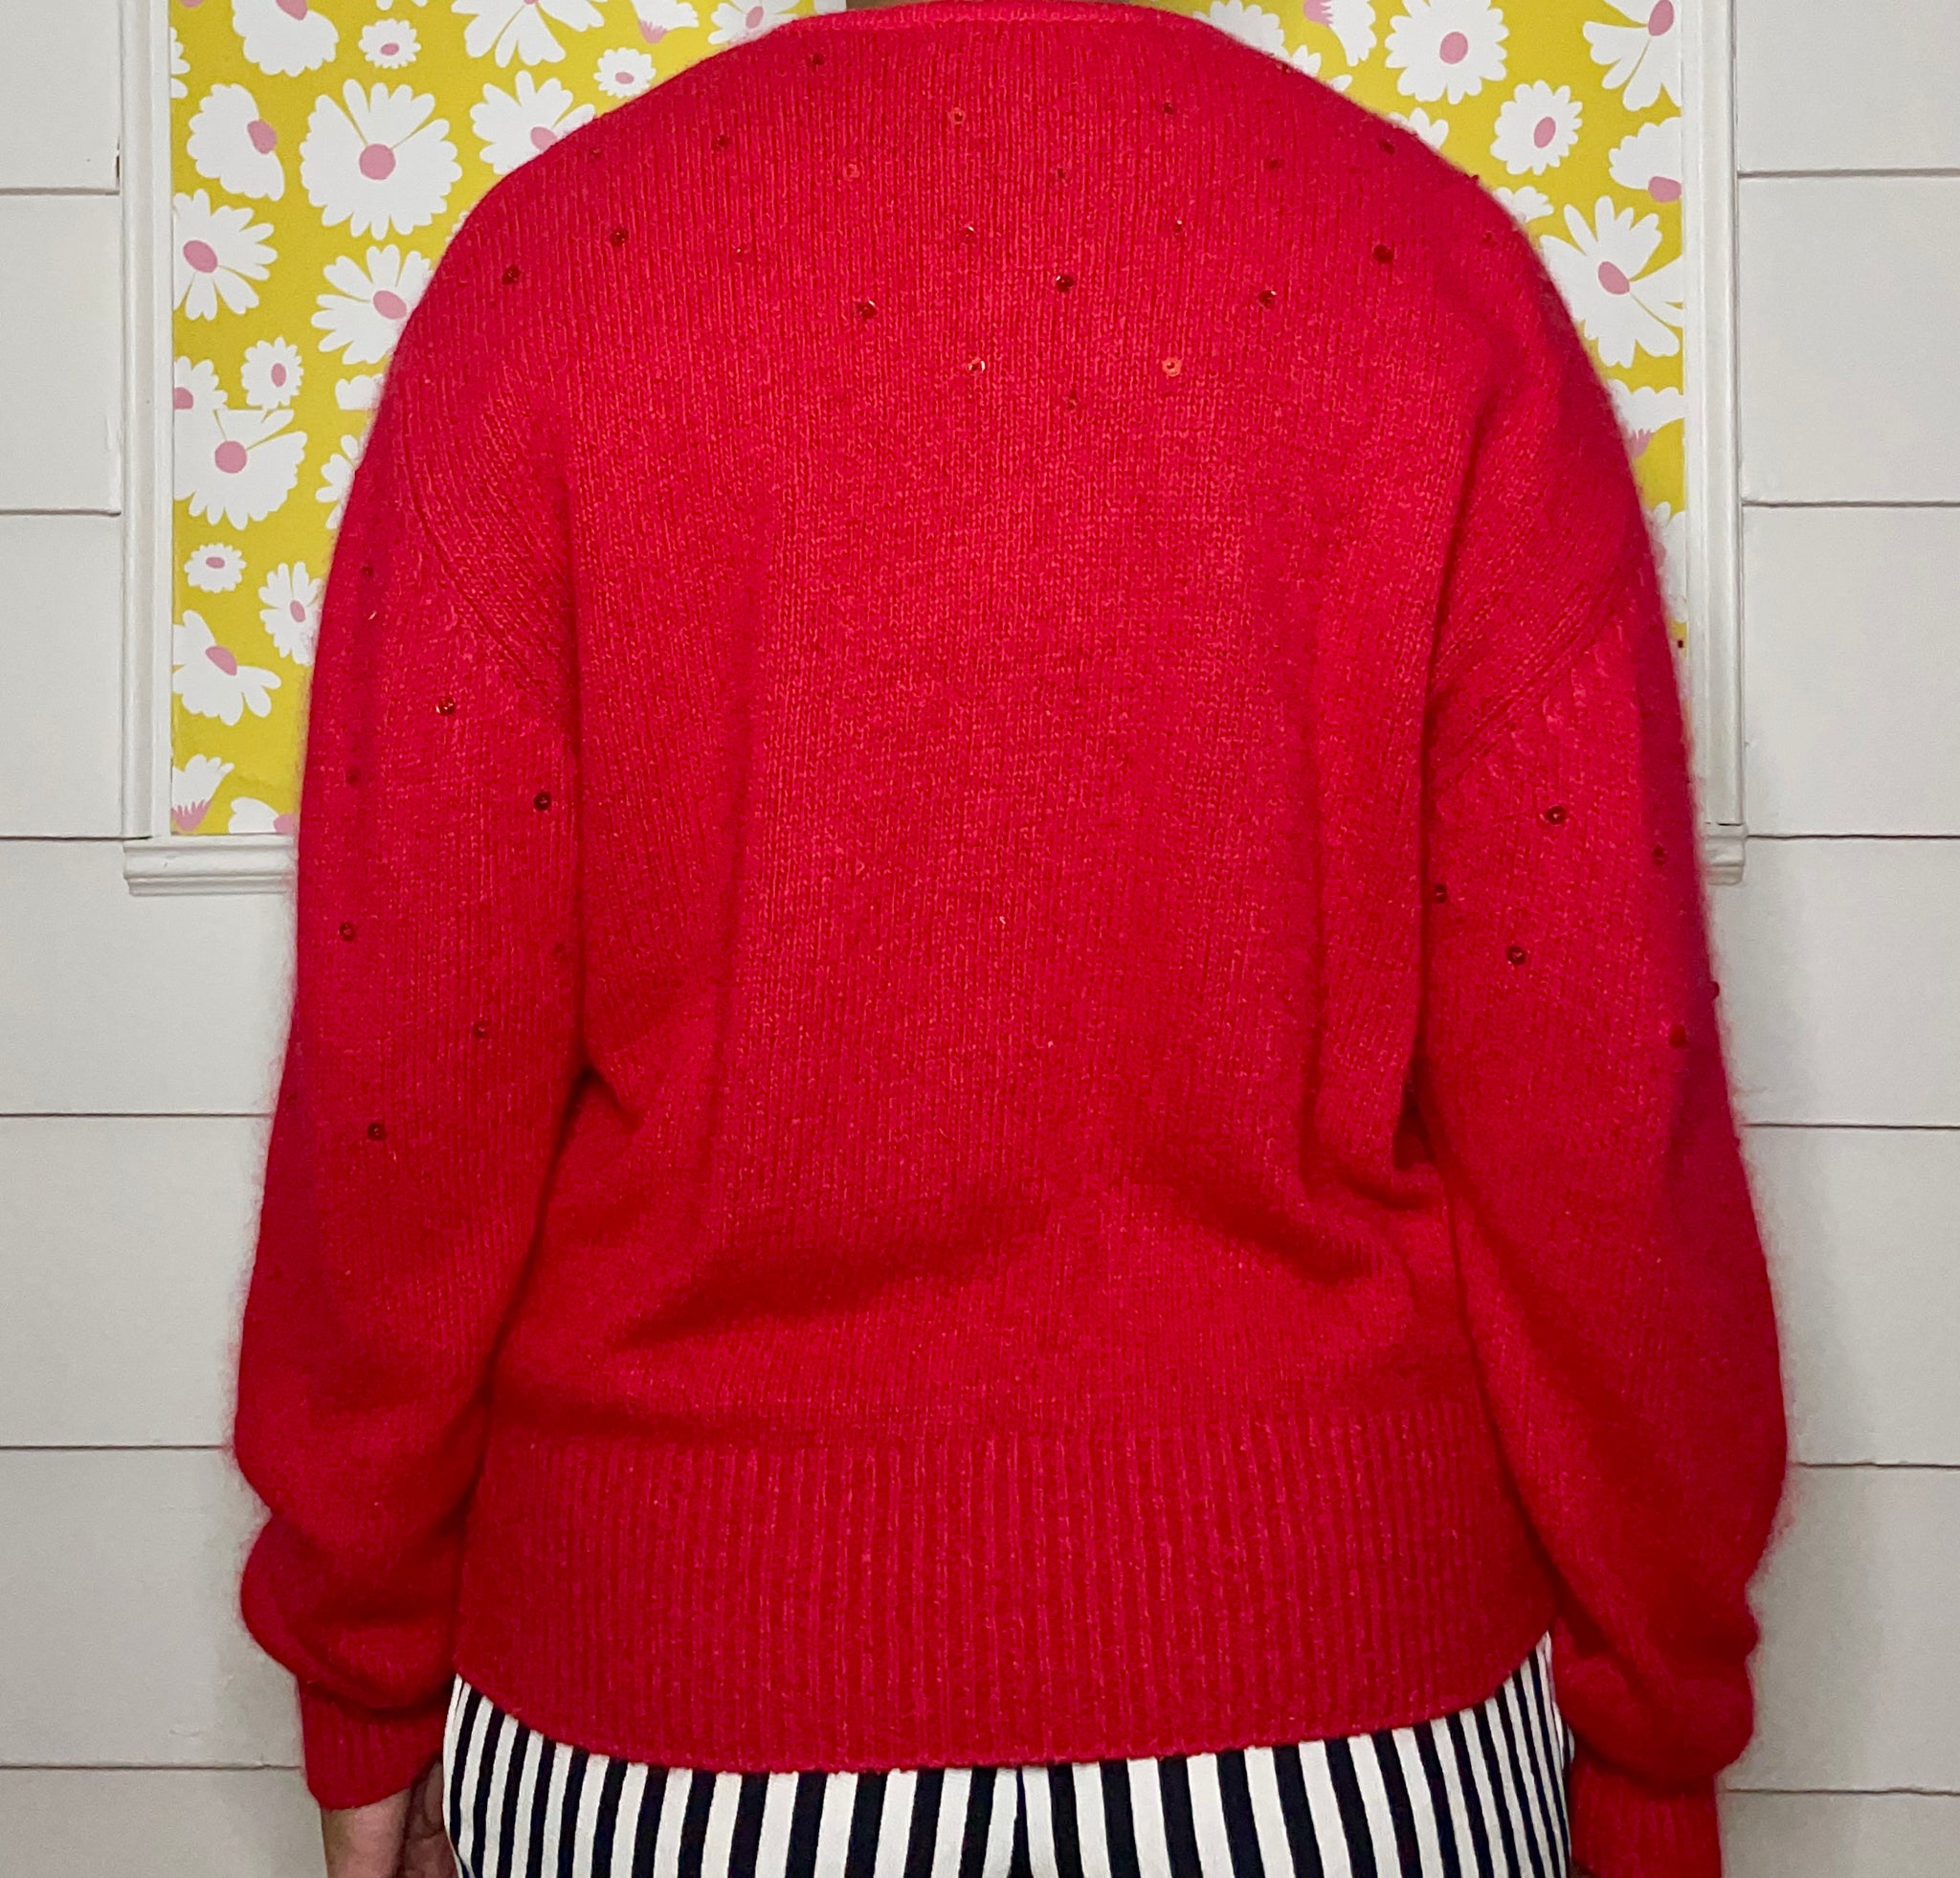 I.B. Fusion Sequin Sweater (L)